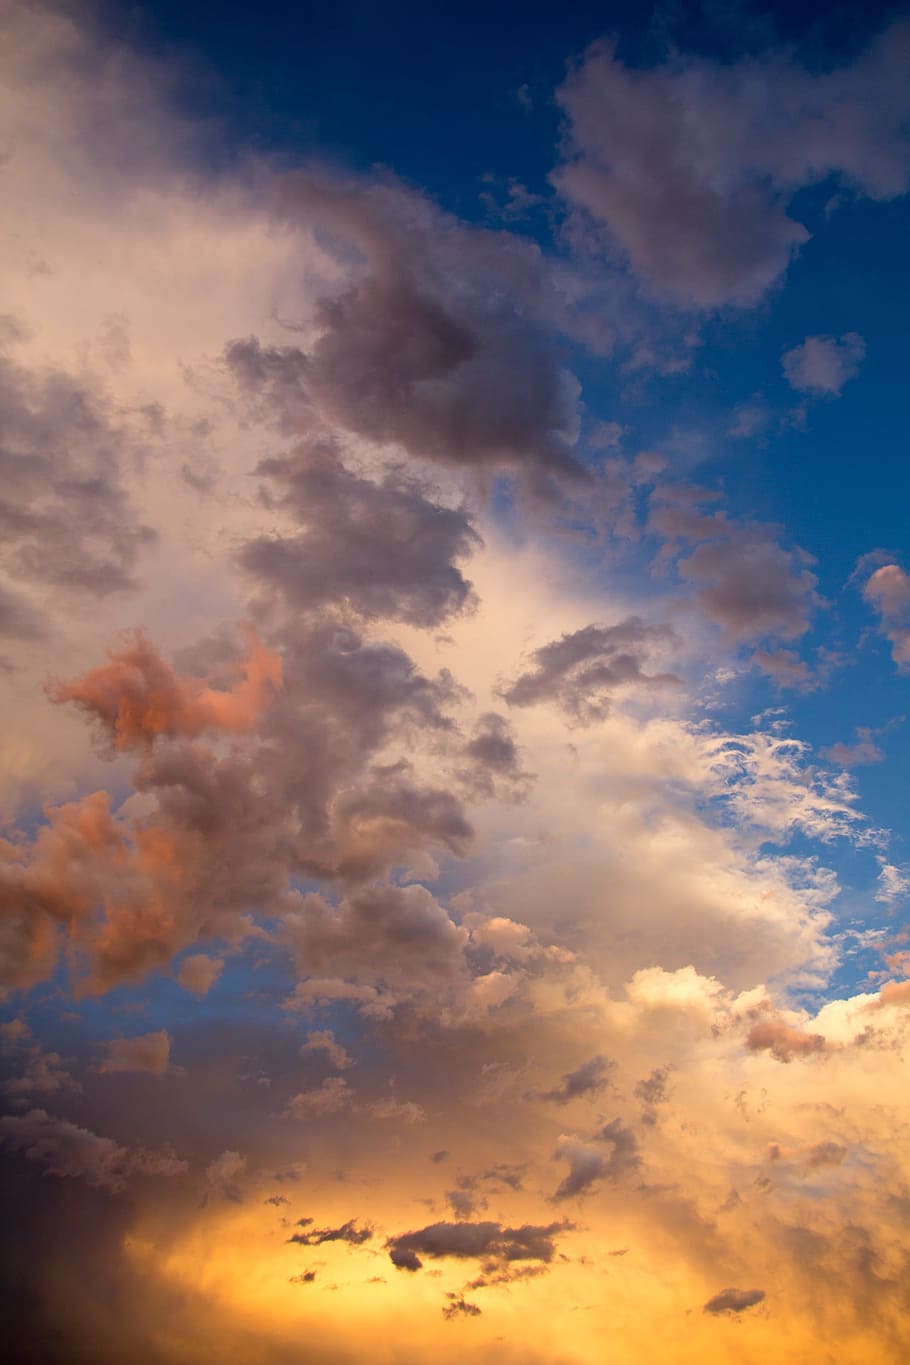 sky during golden hour, clouds, air, storm, orange, blue, blue sky, HD wallpaper